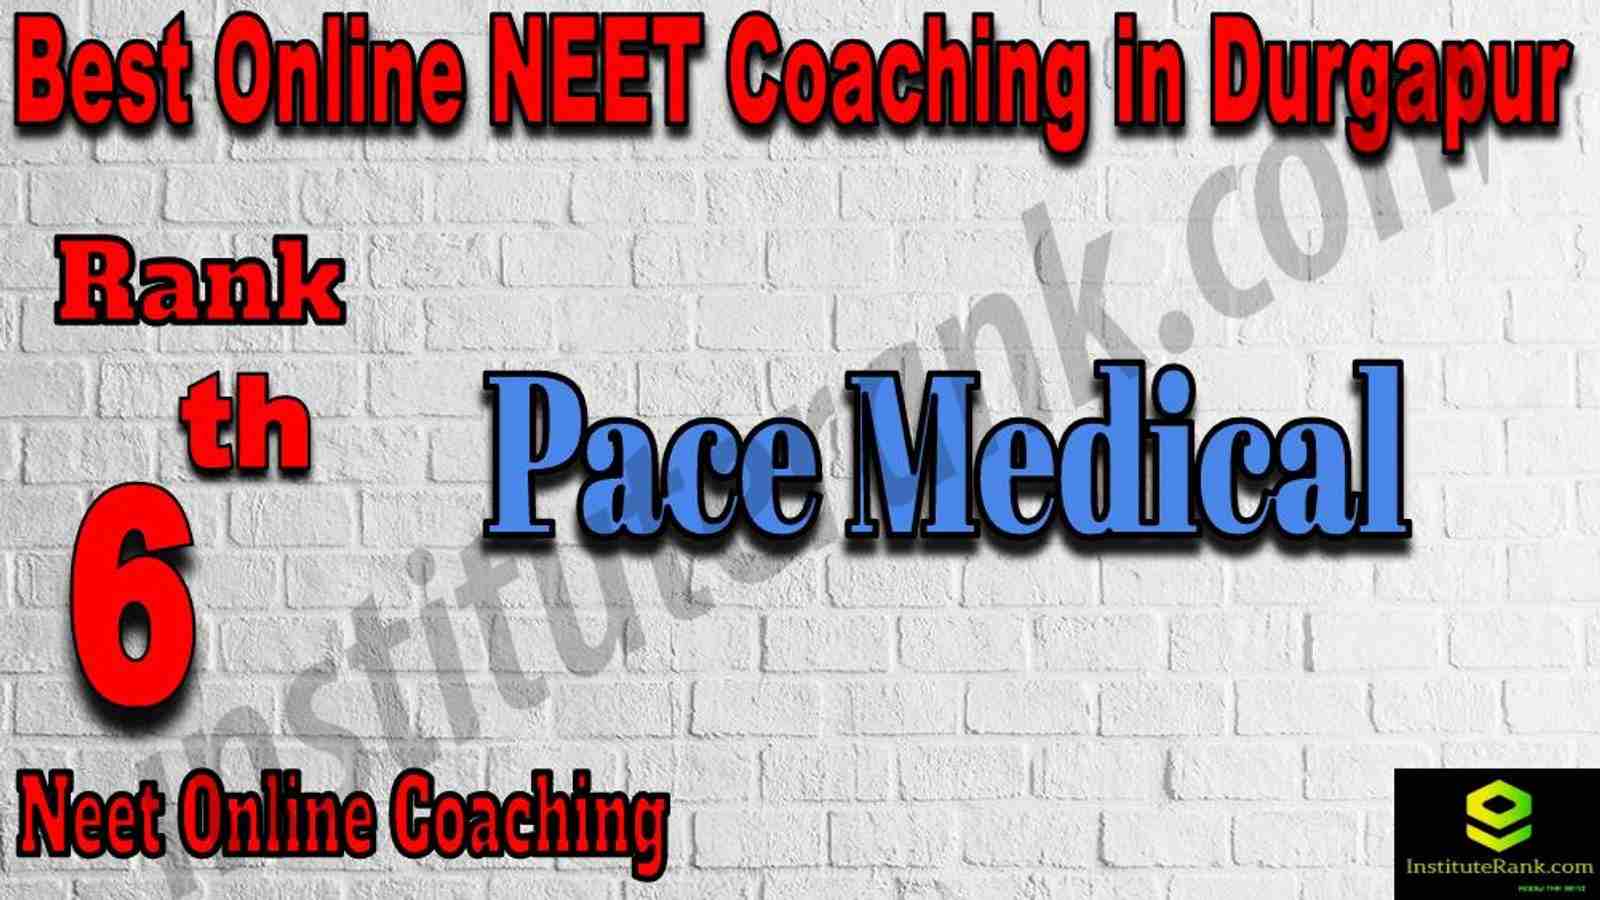 6th Best Online Neet Coaching in Durgapur